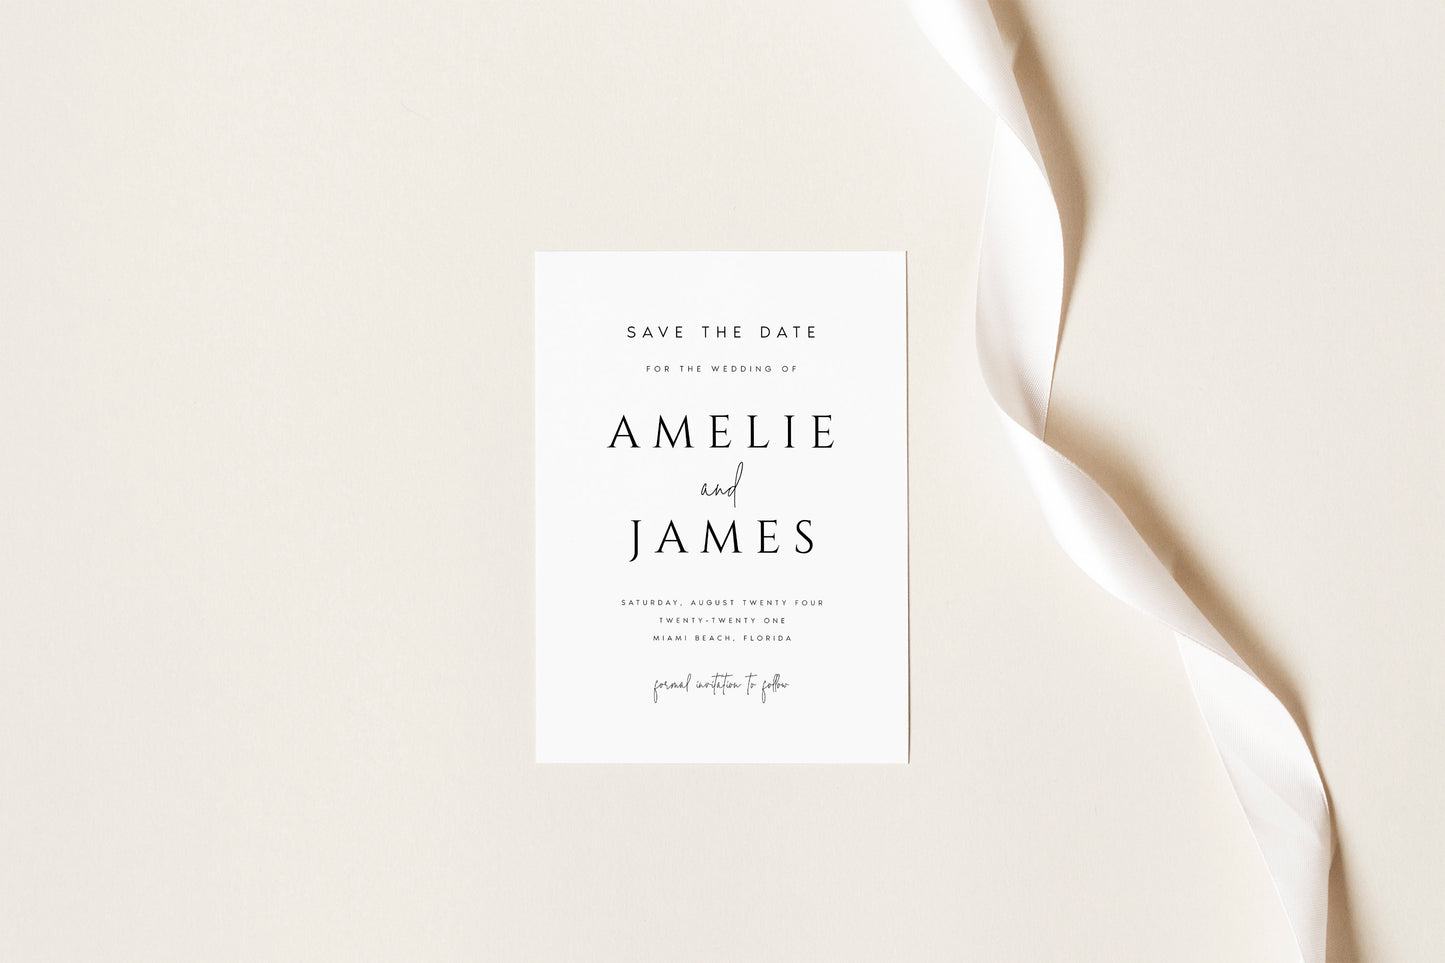 Amelie Modern Minimal Save the Date Editable Template